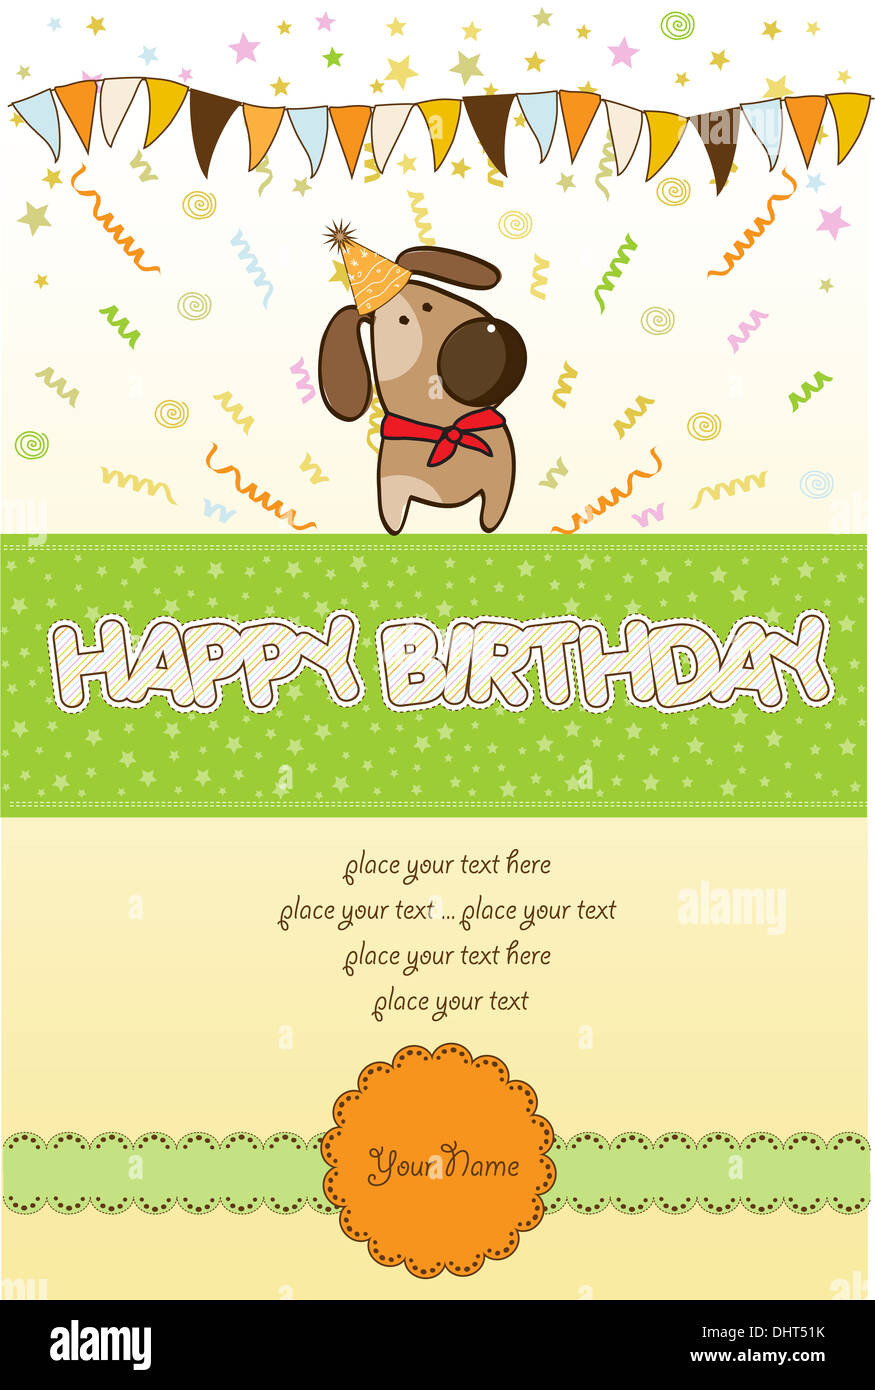 happy birthday card Stock Photo - Alamy